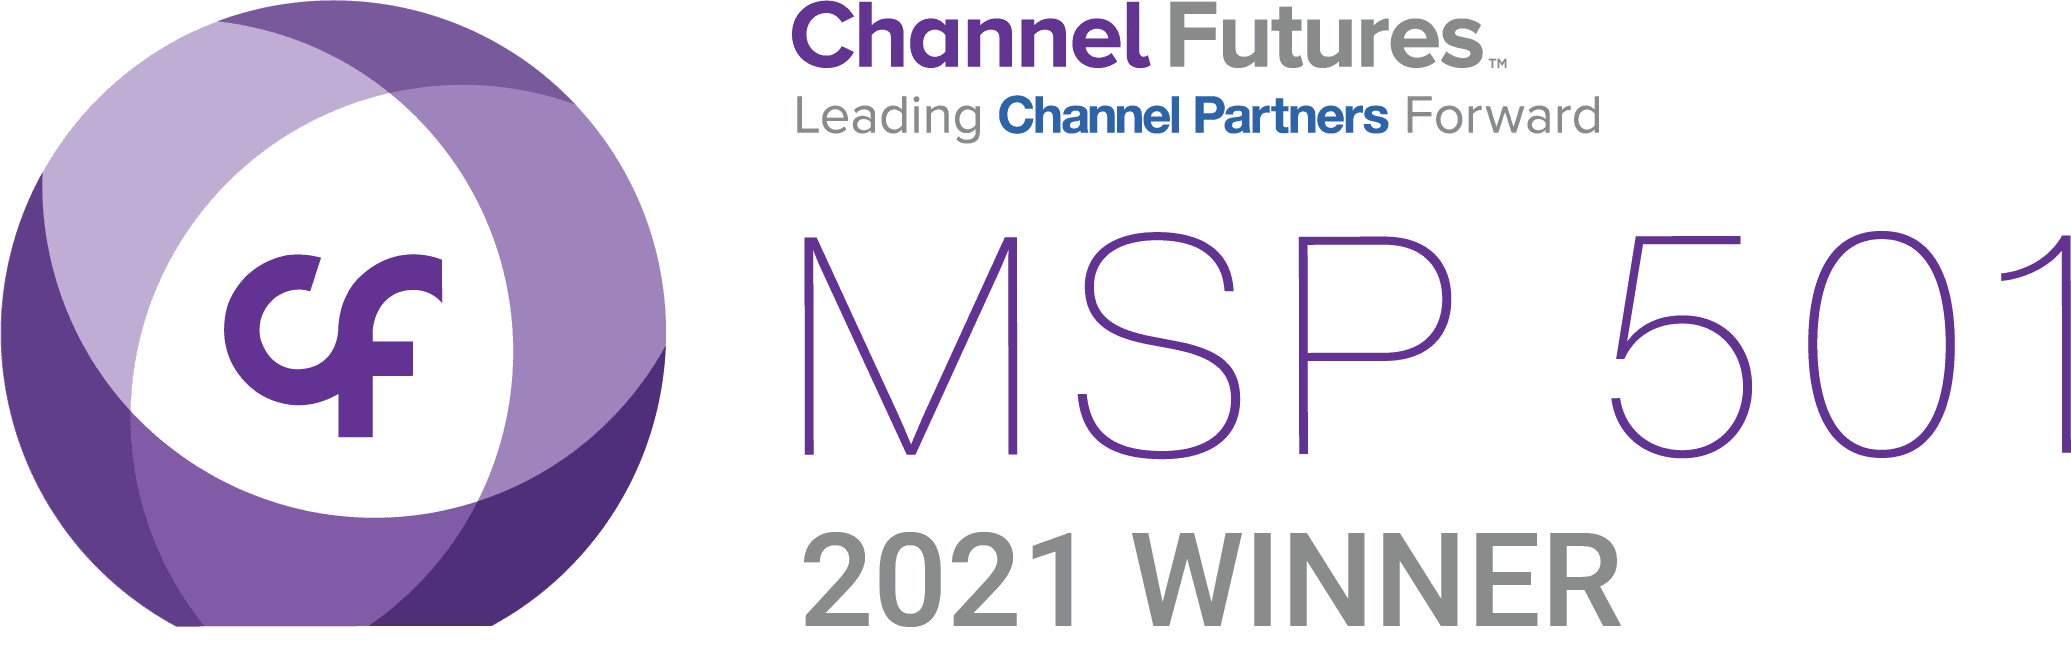 MSP 501 Winner Logo 2021